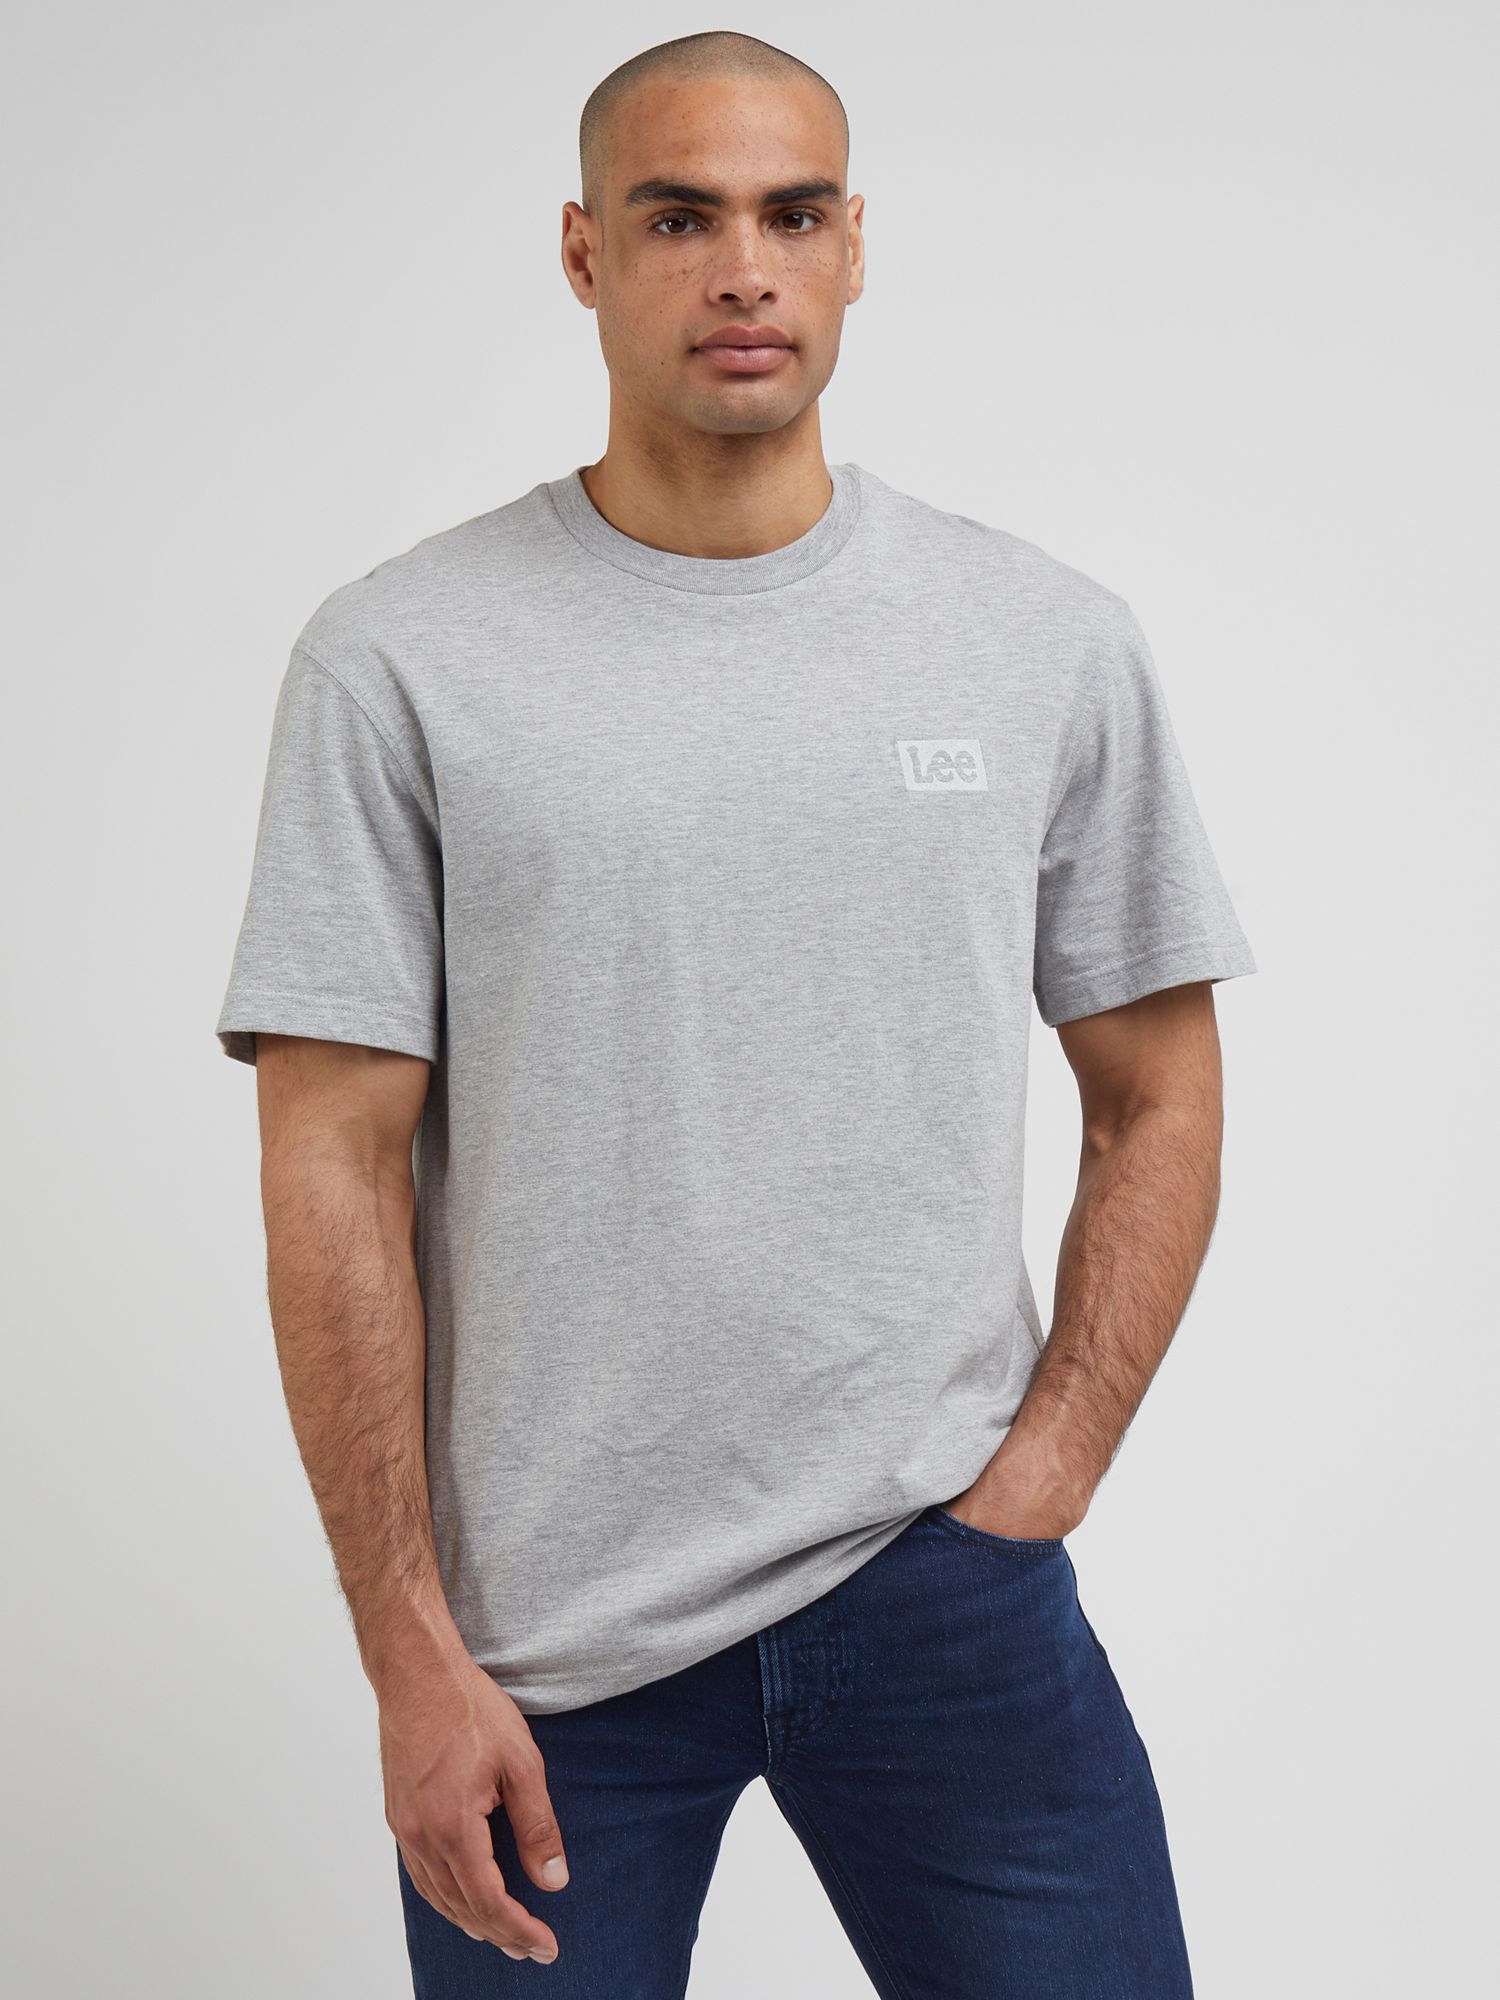 Loose T-Shirt, Grey at Lewis Partners